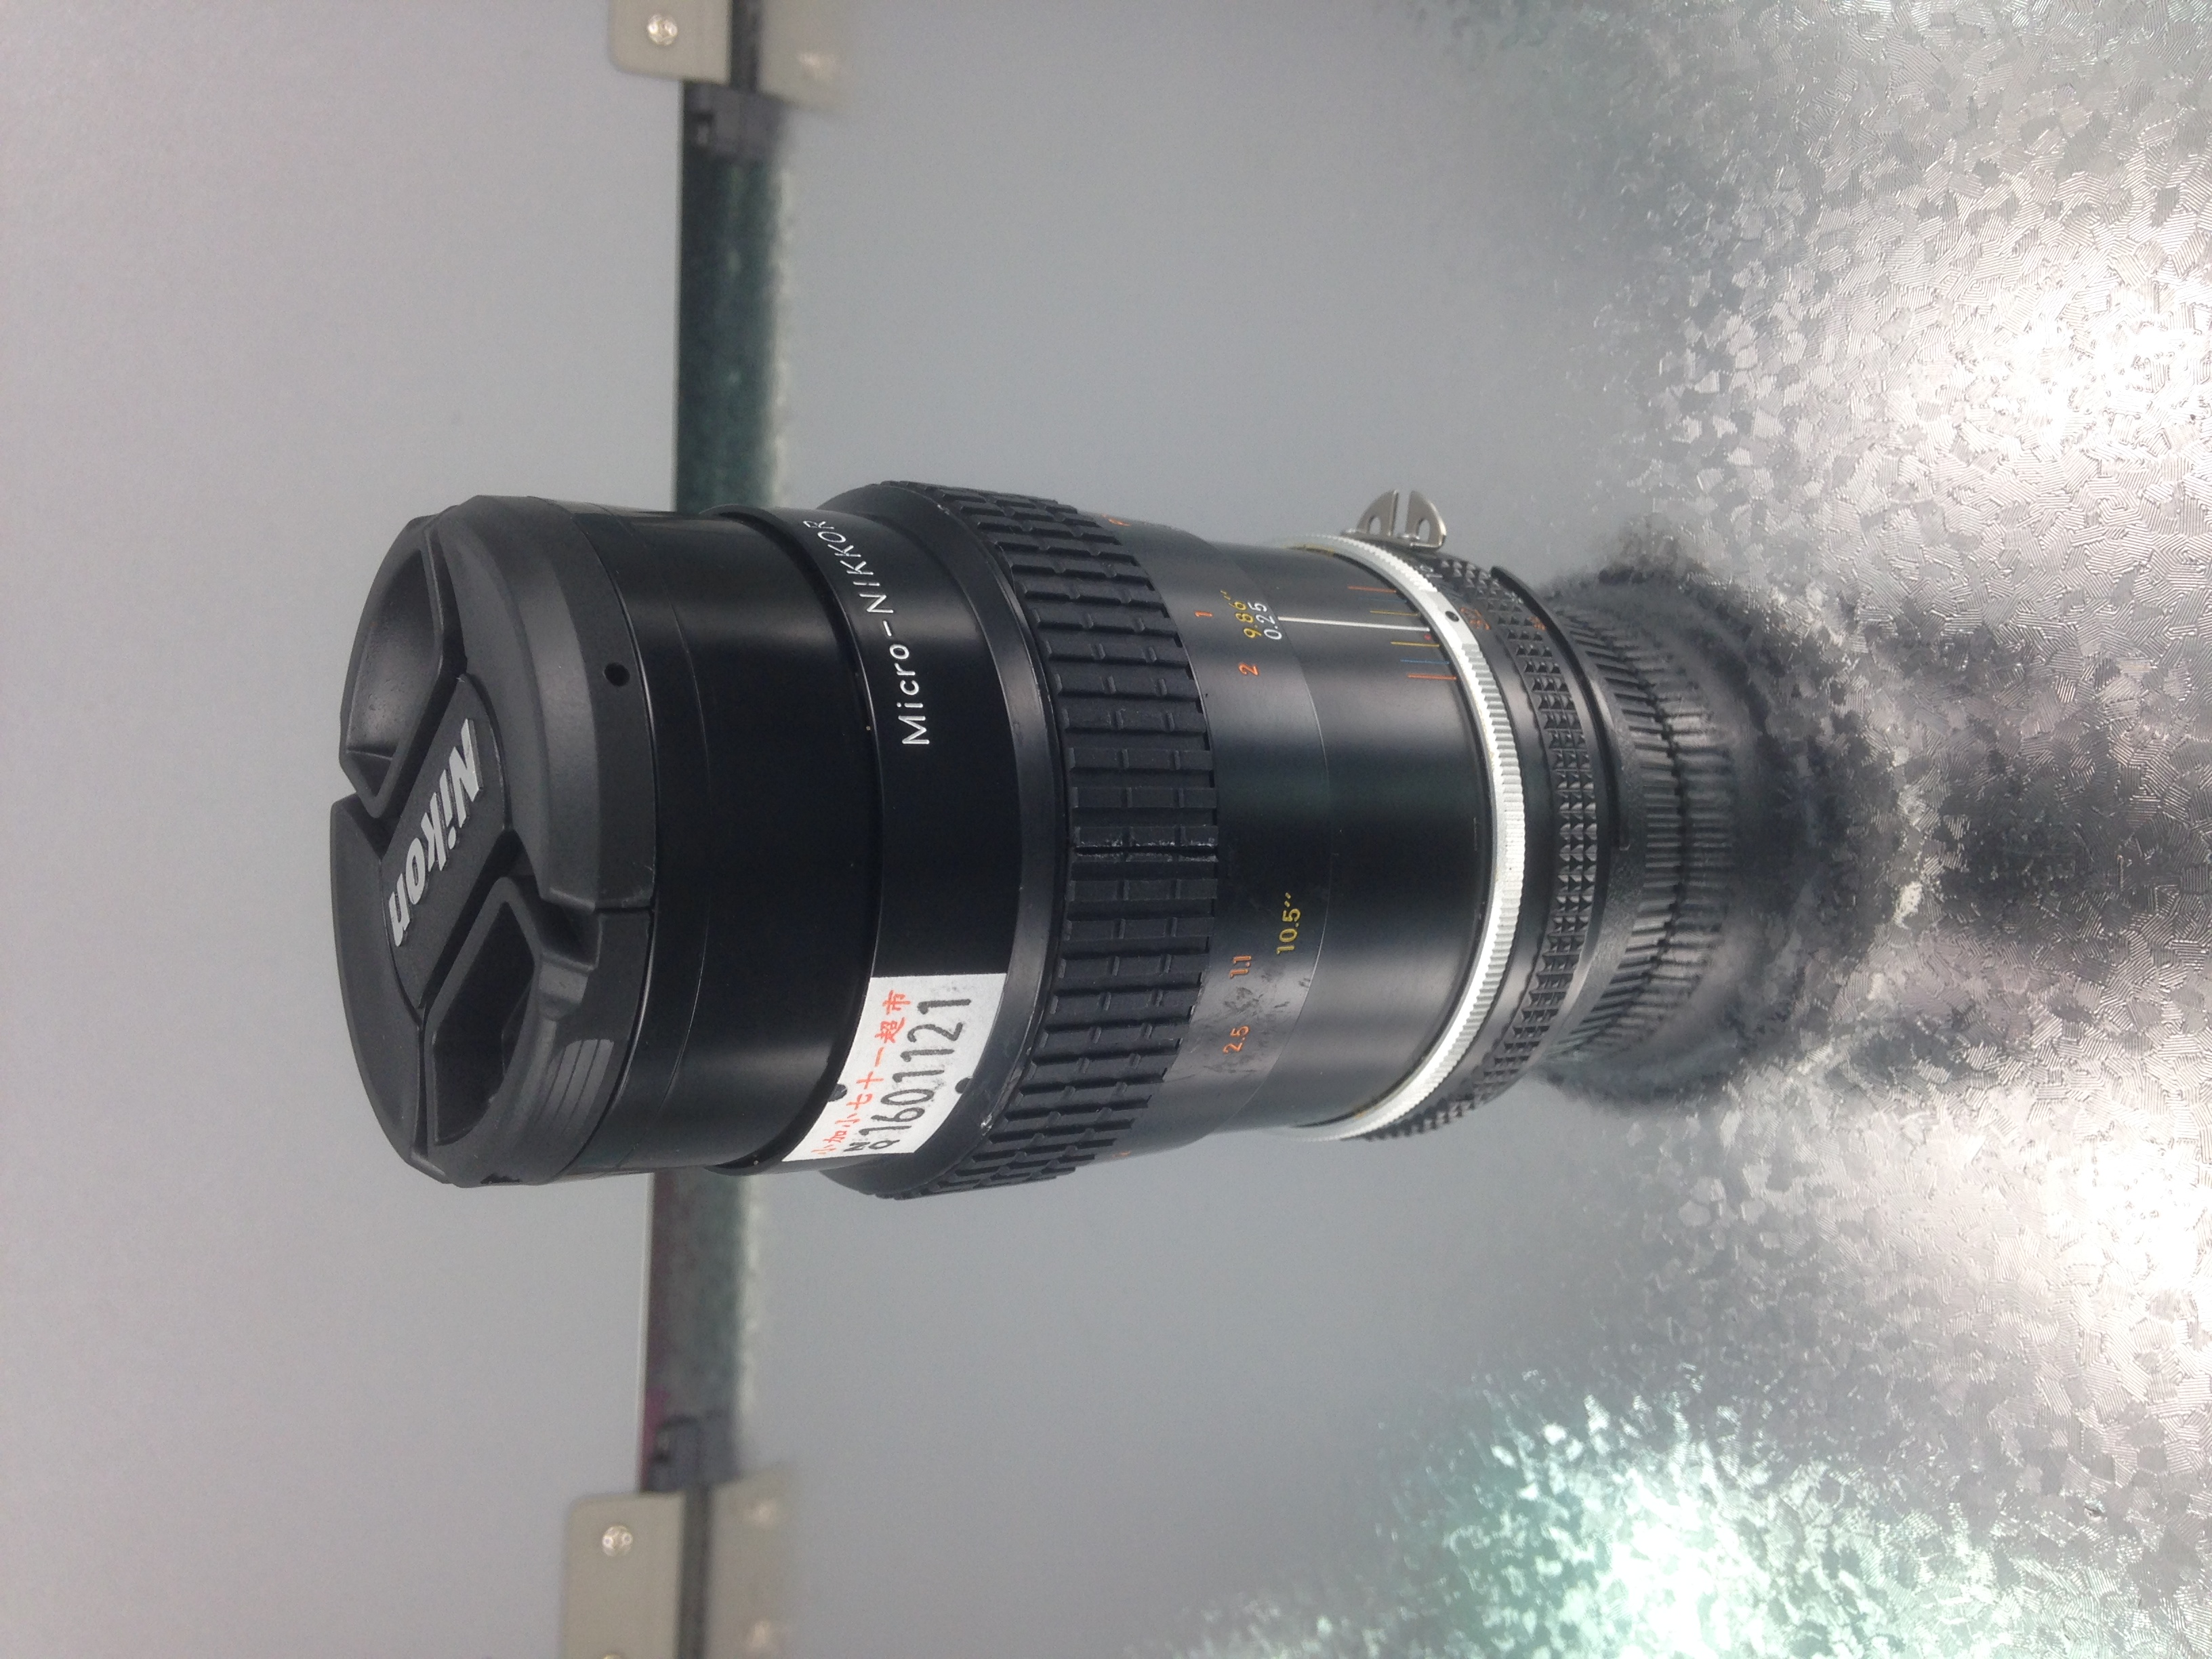 55mm2.8AIS口微距手动镜头。